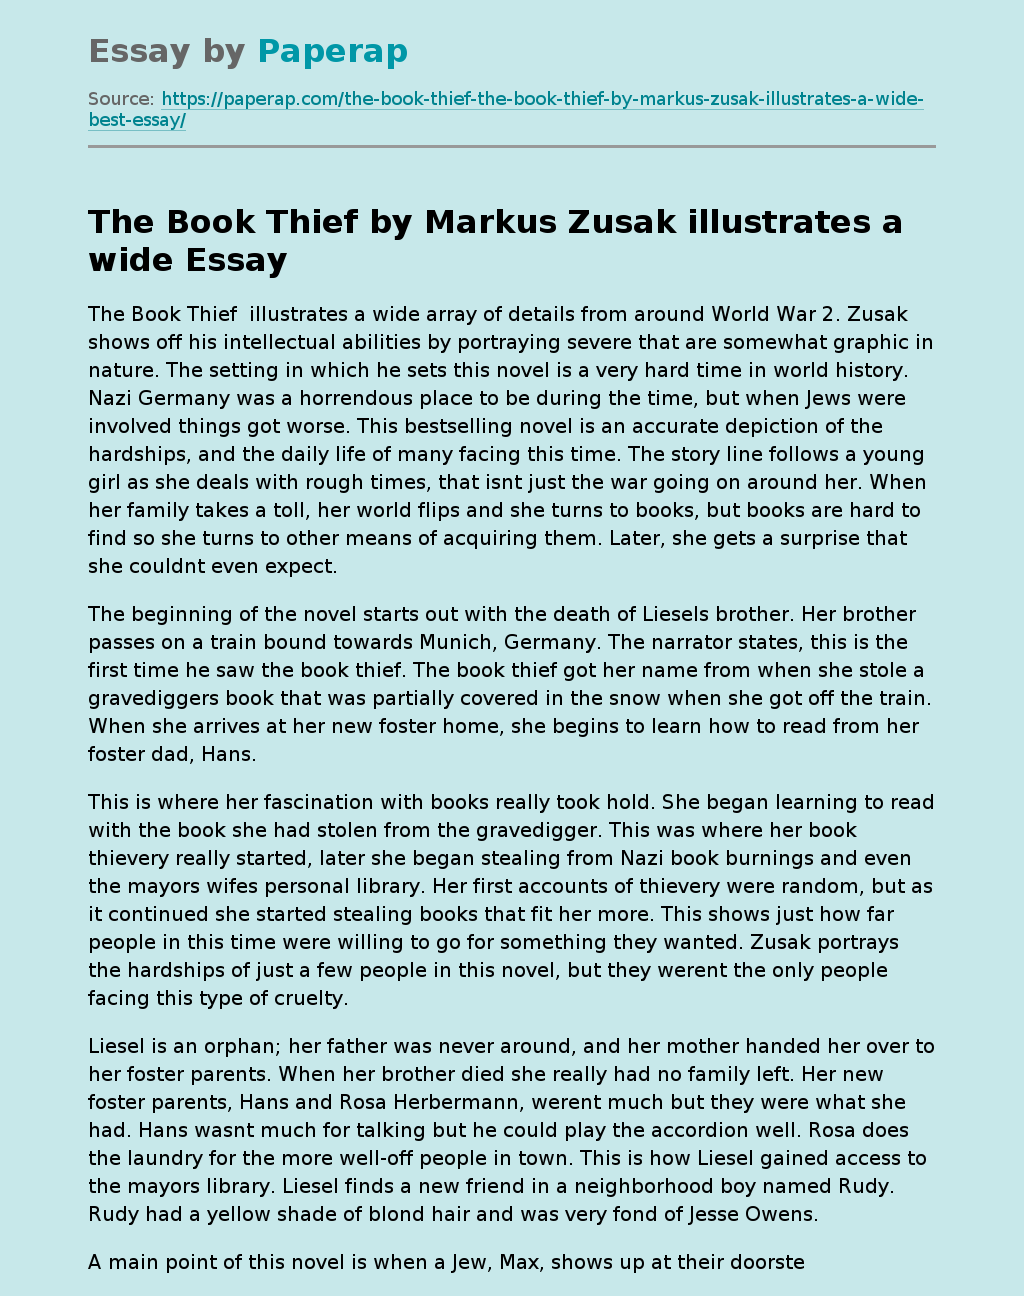 The Book Thief by Markus Zusak illustrates a wide